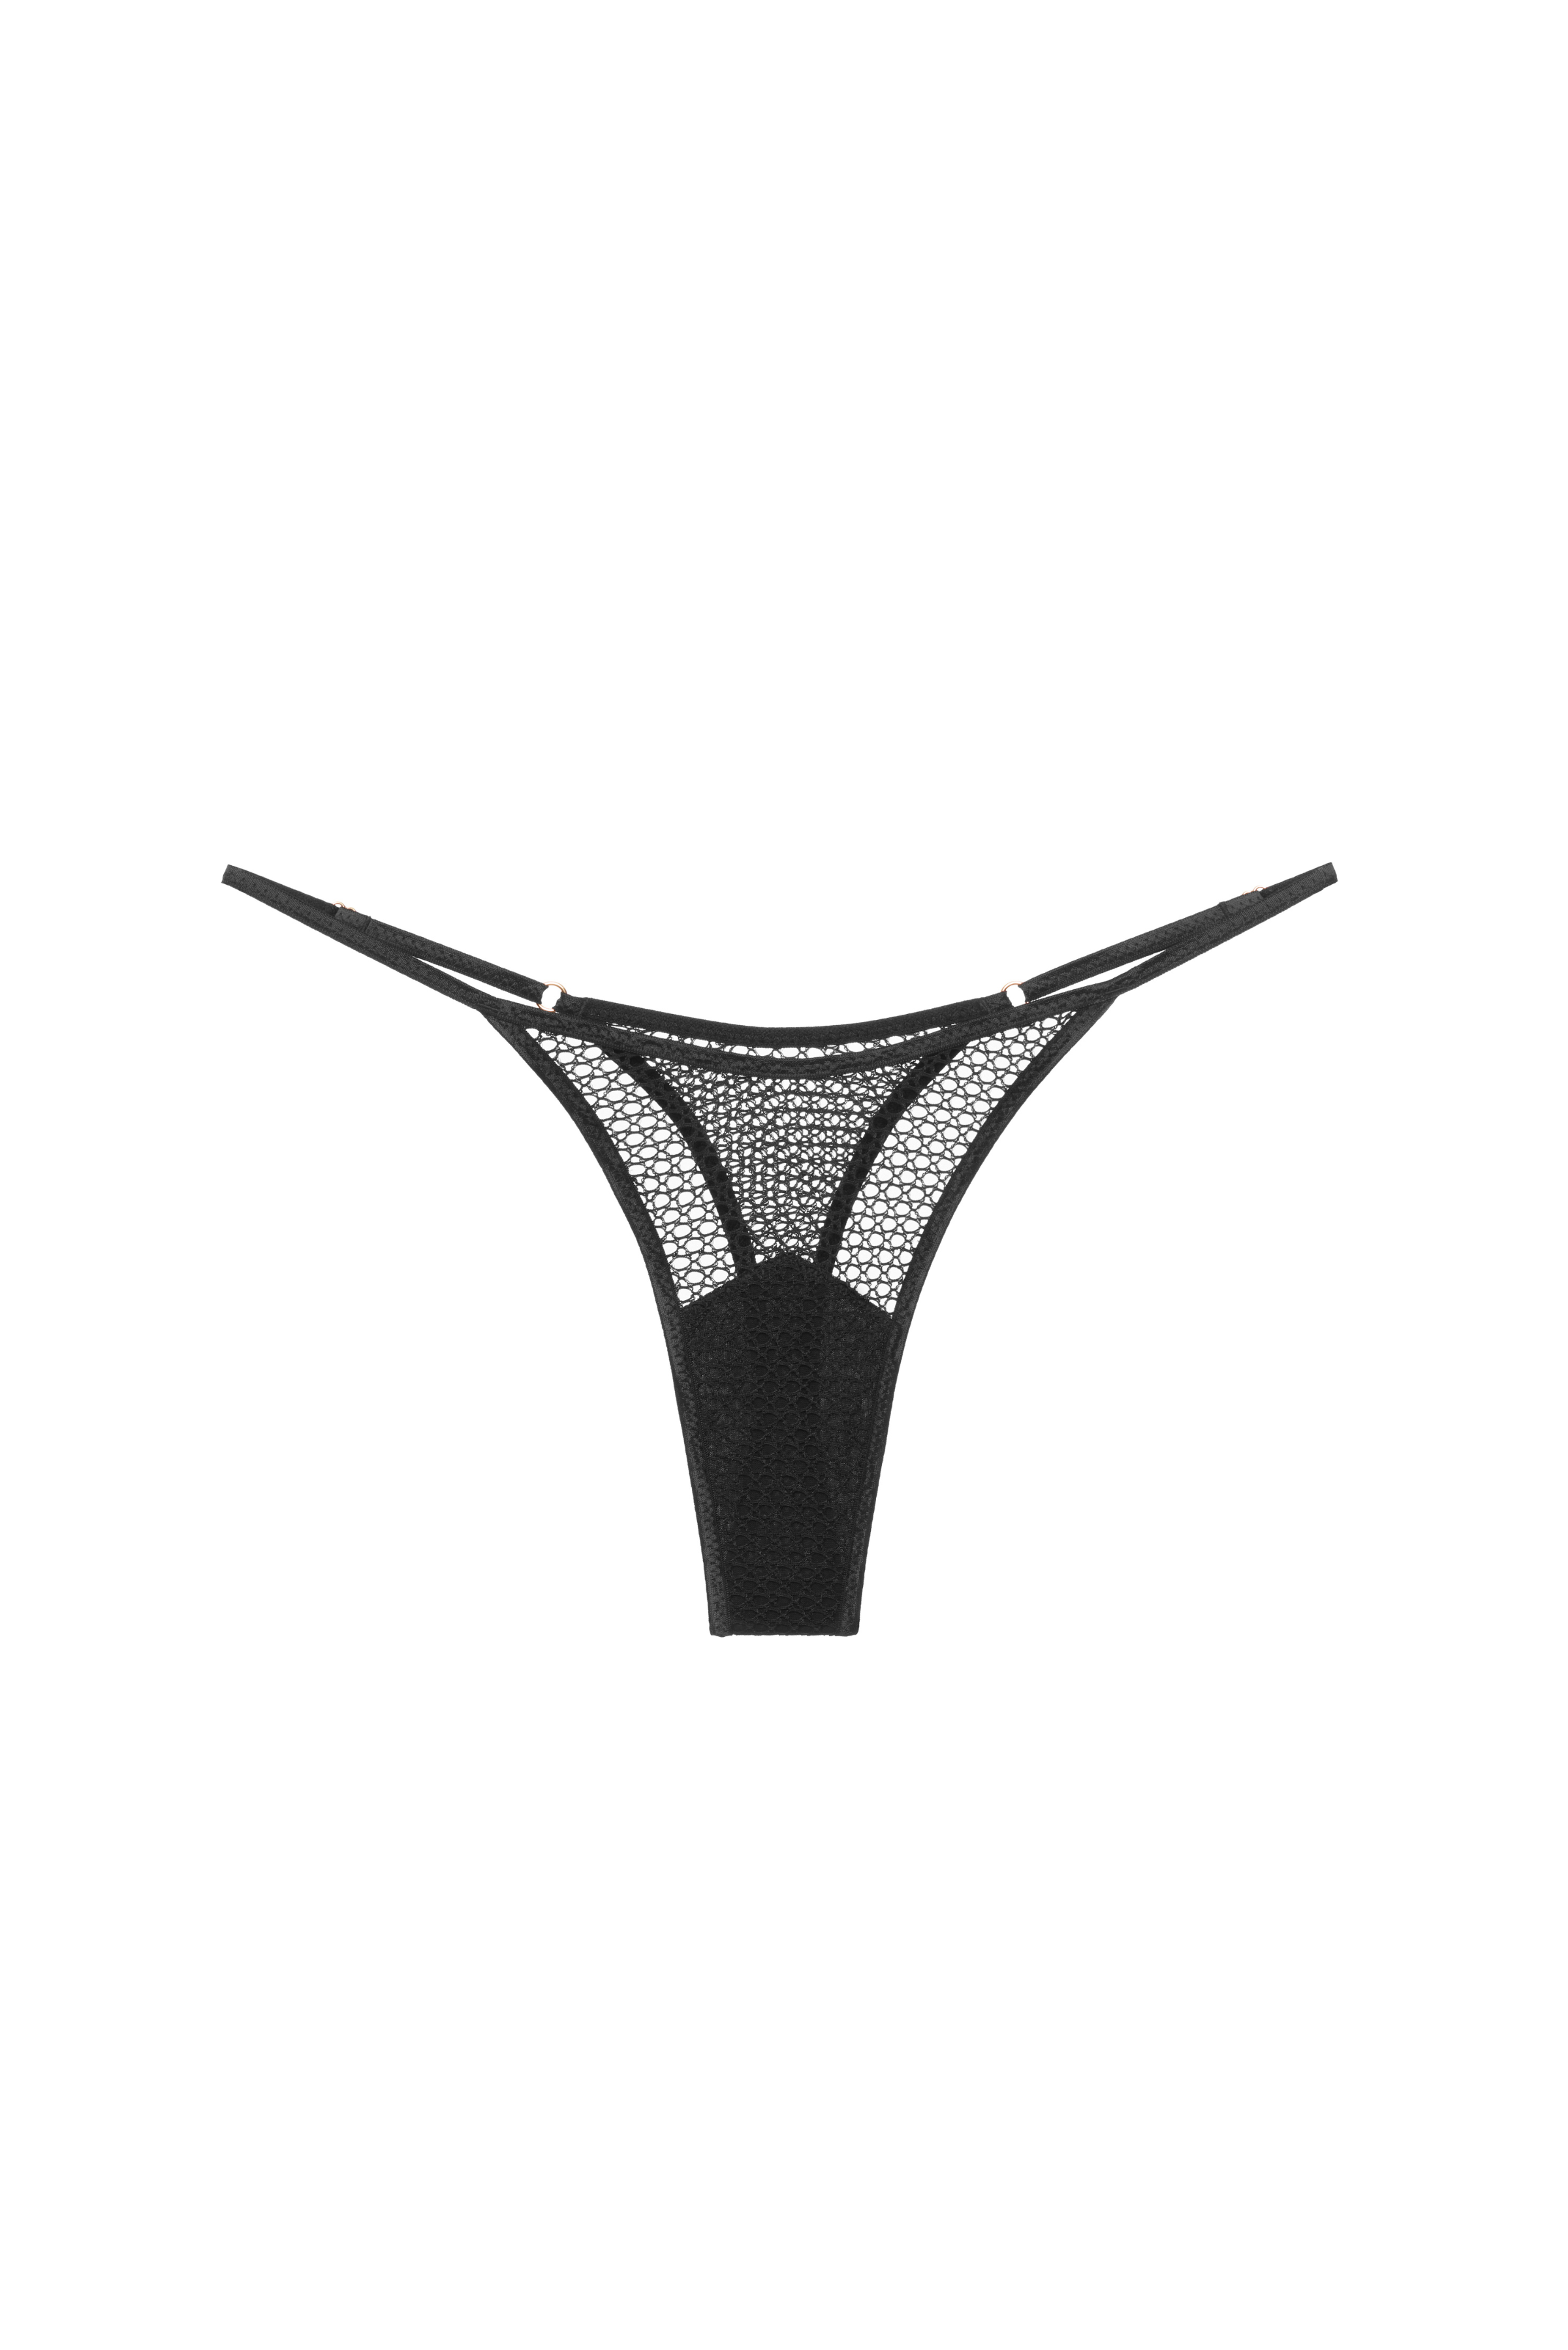 Wholesale diamond back strap bra For Supportive Underwear